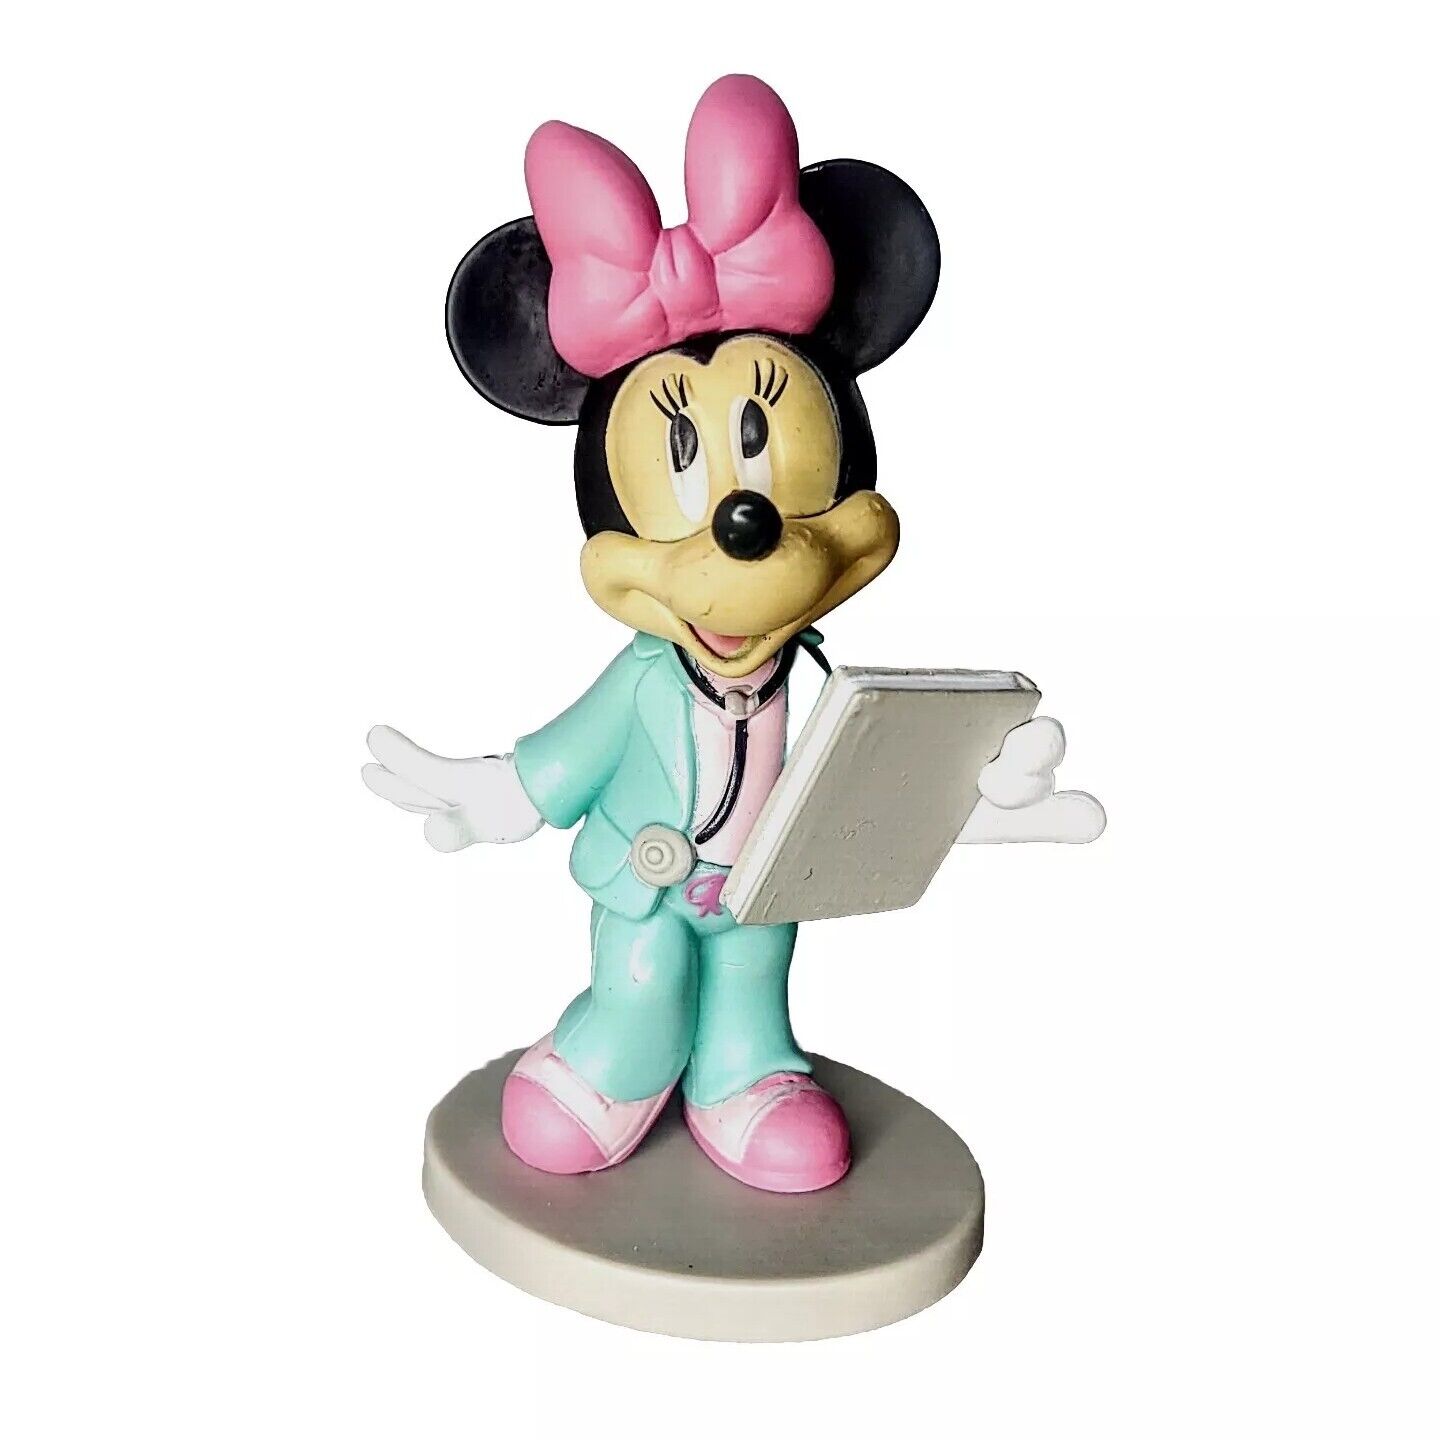 Minnie Mouse as Doctor Nurse Figure Miniature Figurine Birthday Cake Topper